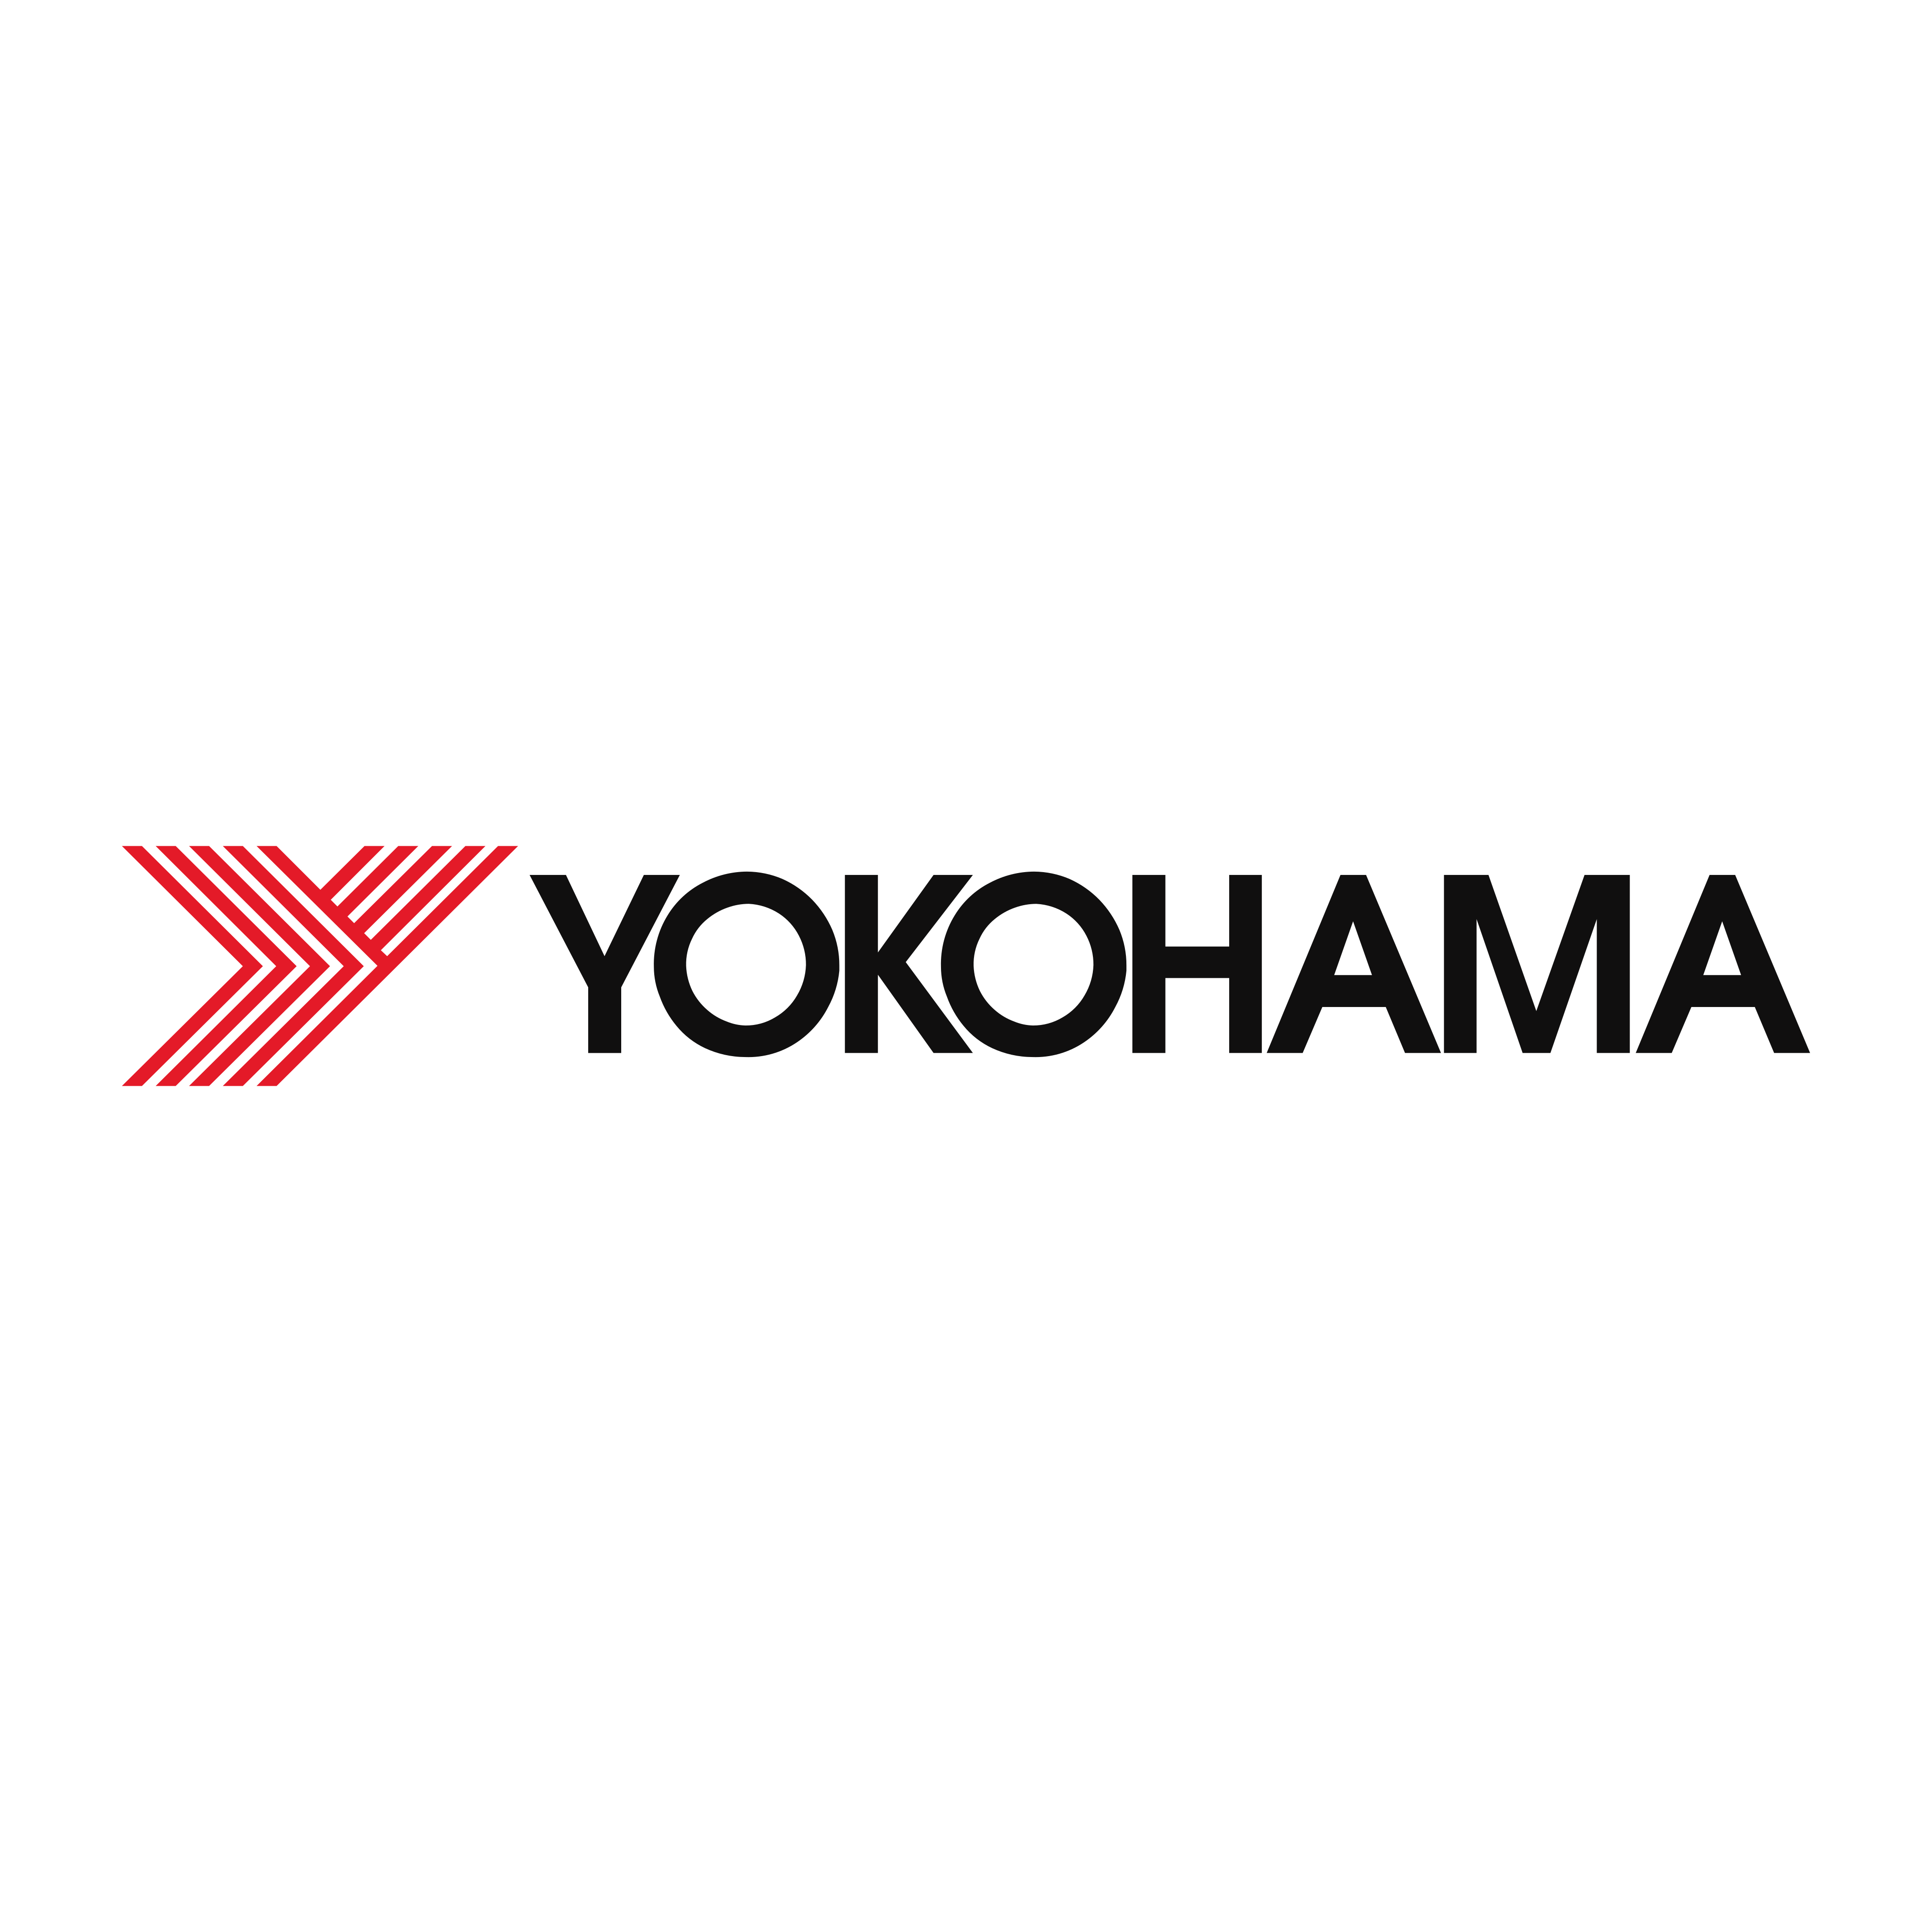 Yokohama Logo Png - KibrisPDR